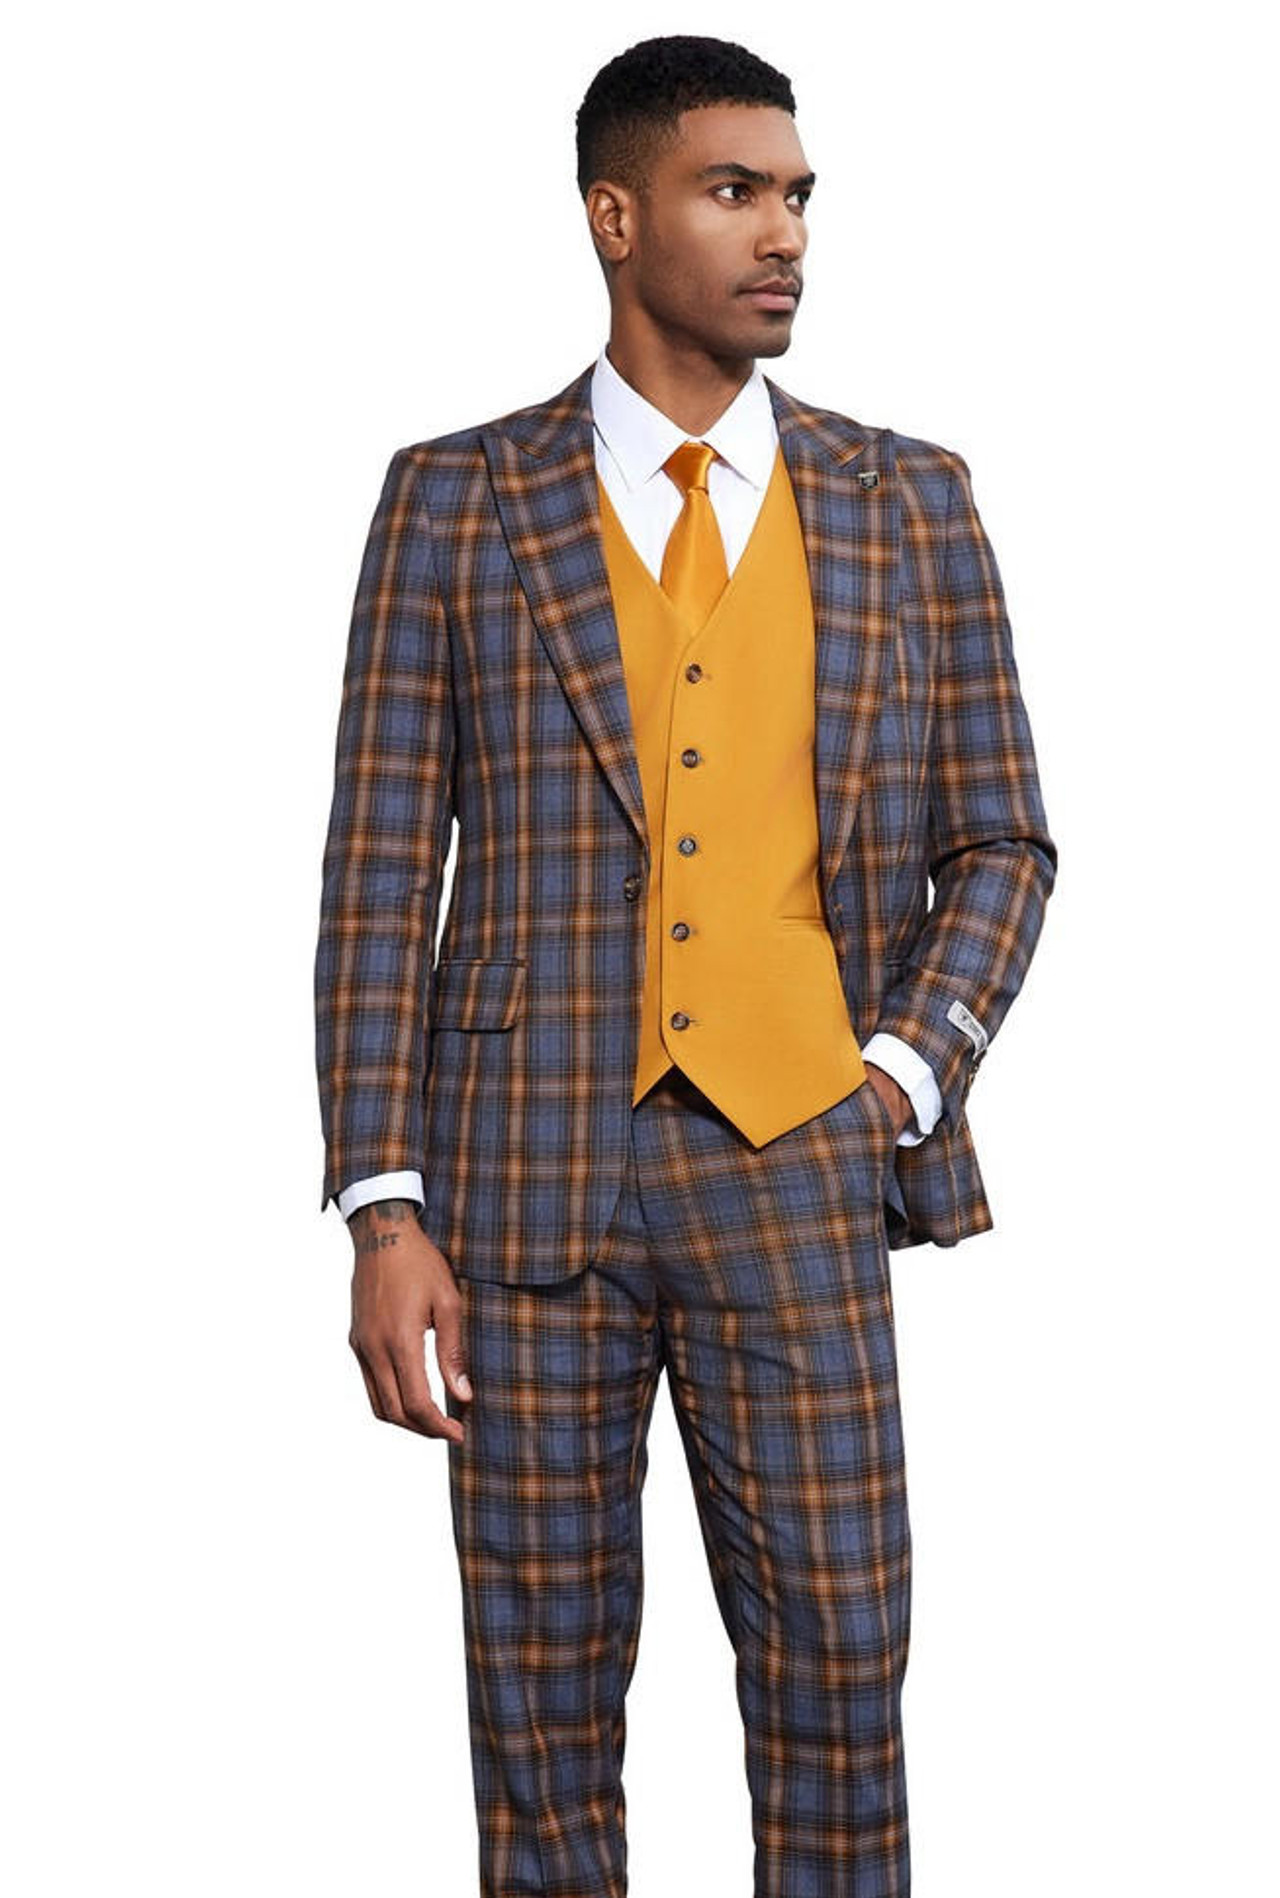 Inexpensive 3 Piece Suits For Men | Contempo Suits